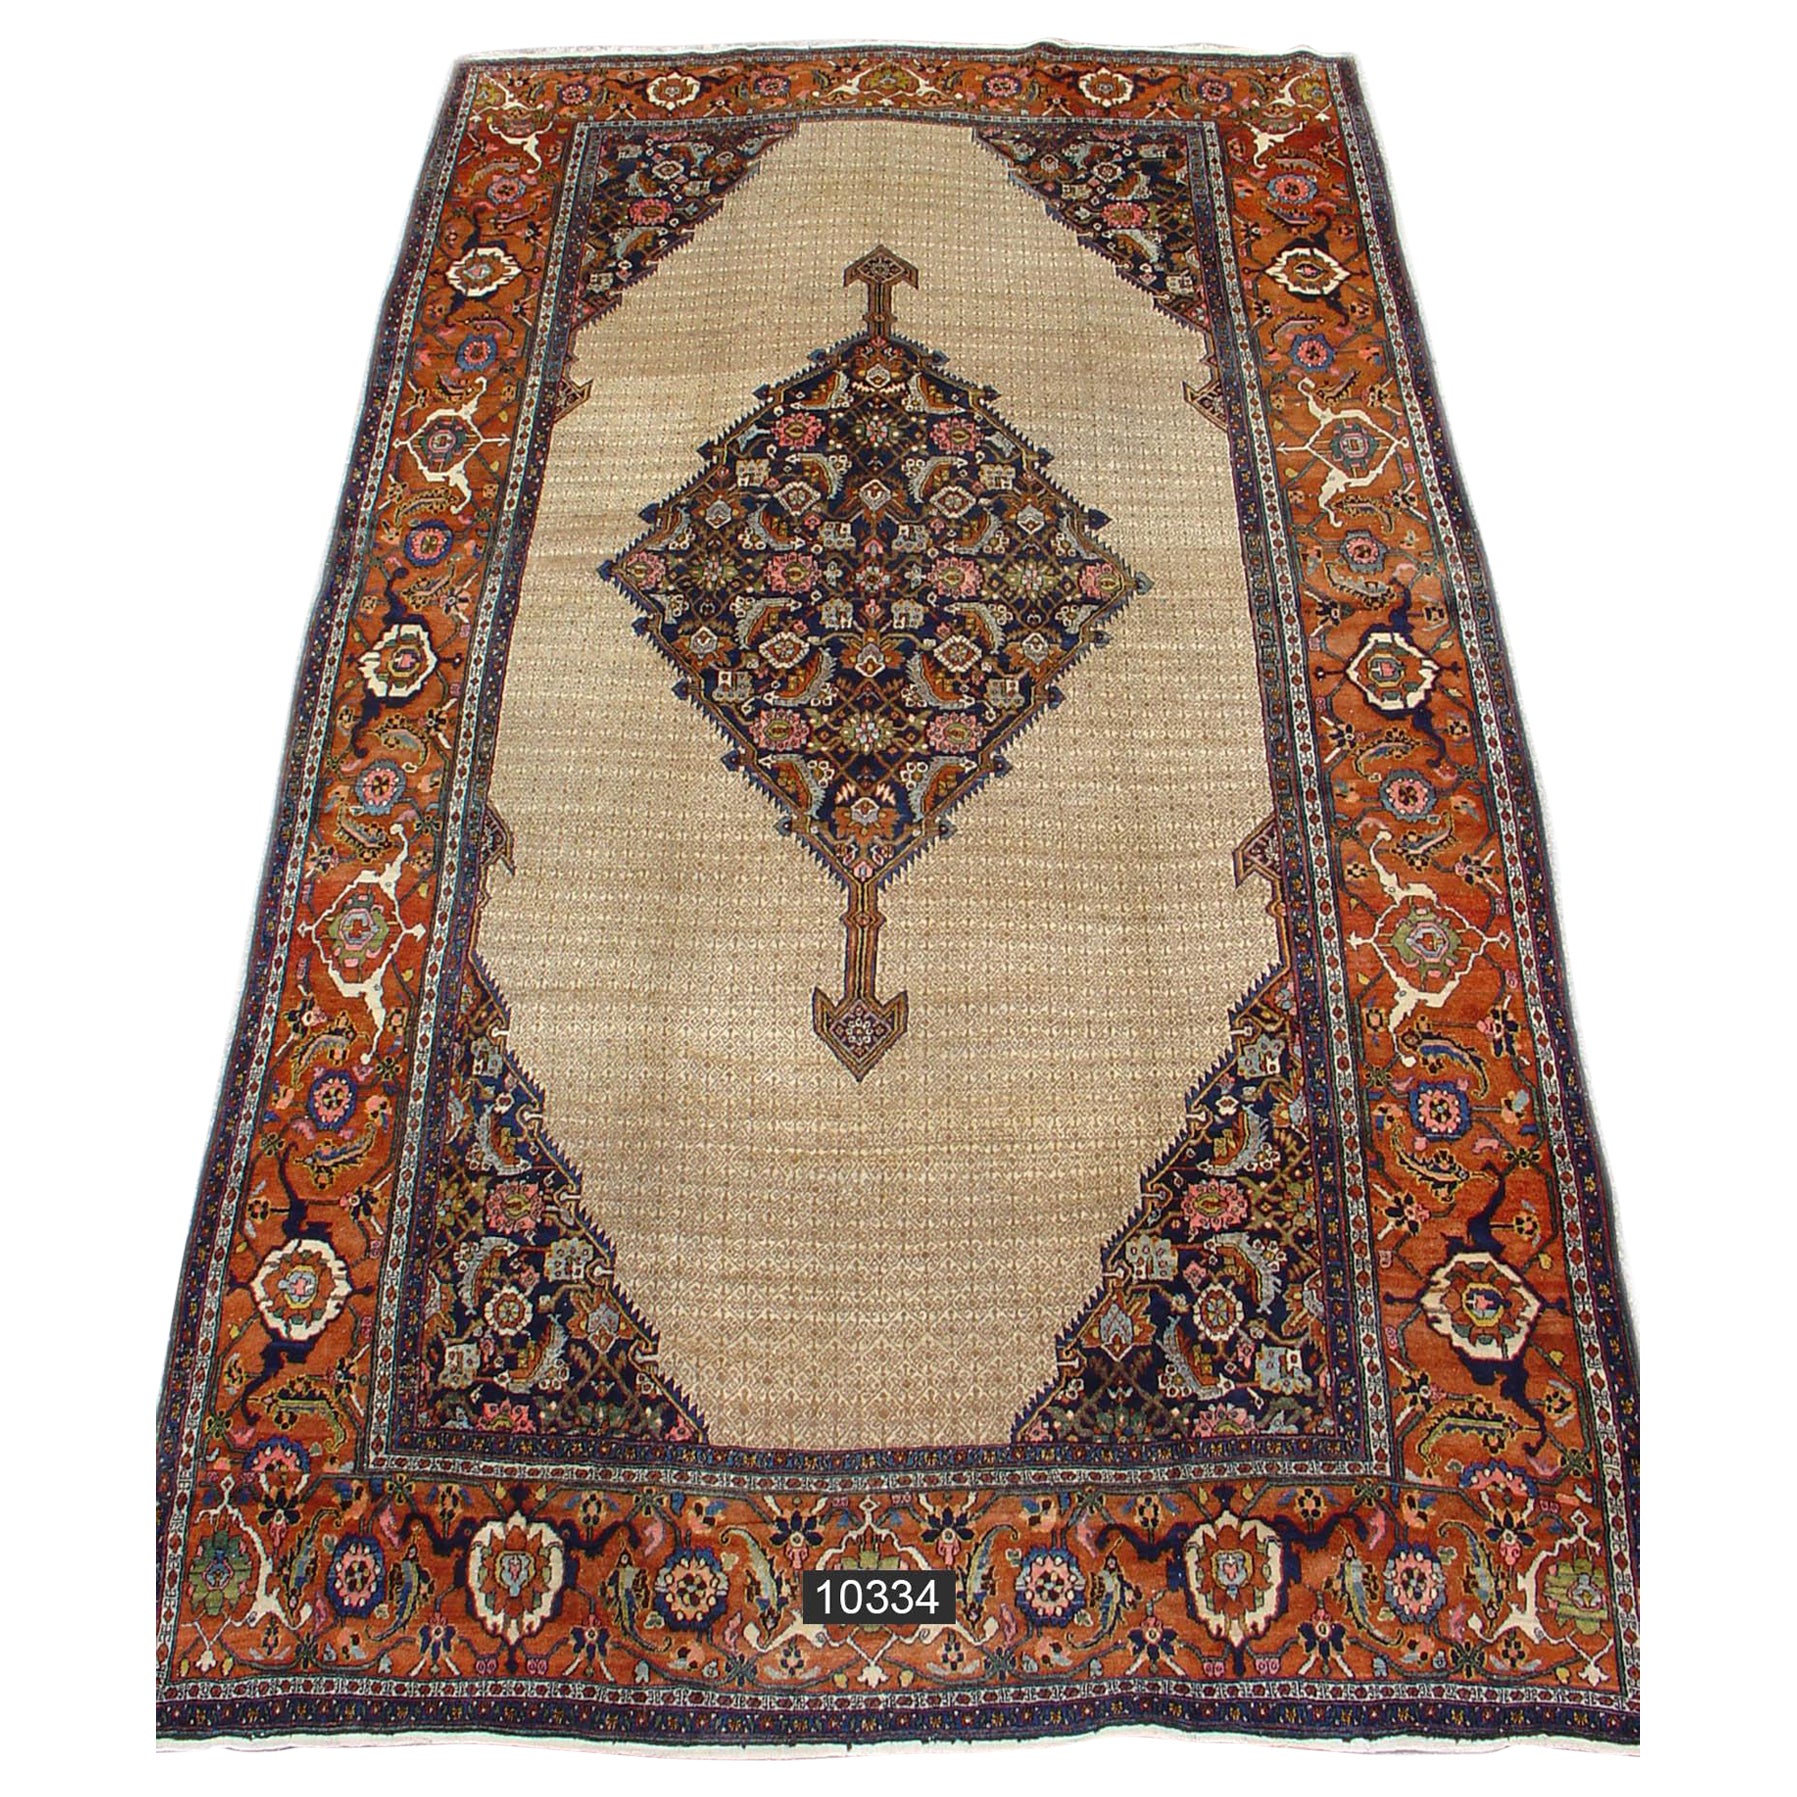 Antique Large Persian Hamadan Carpet, Early 20th Century